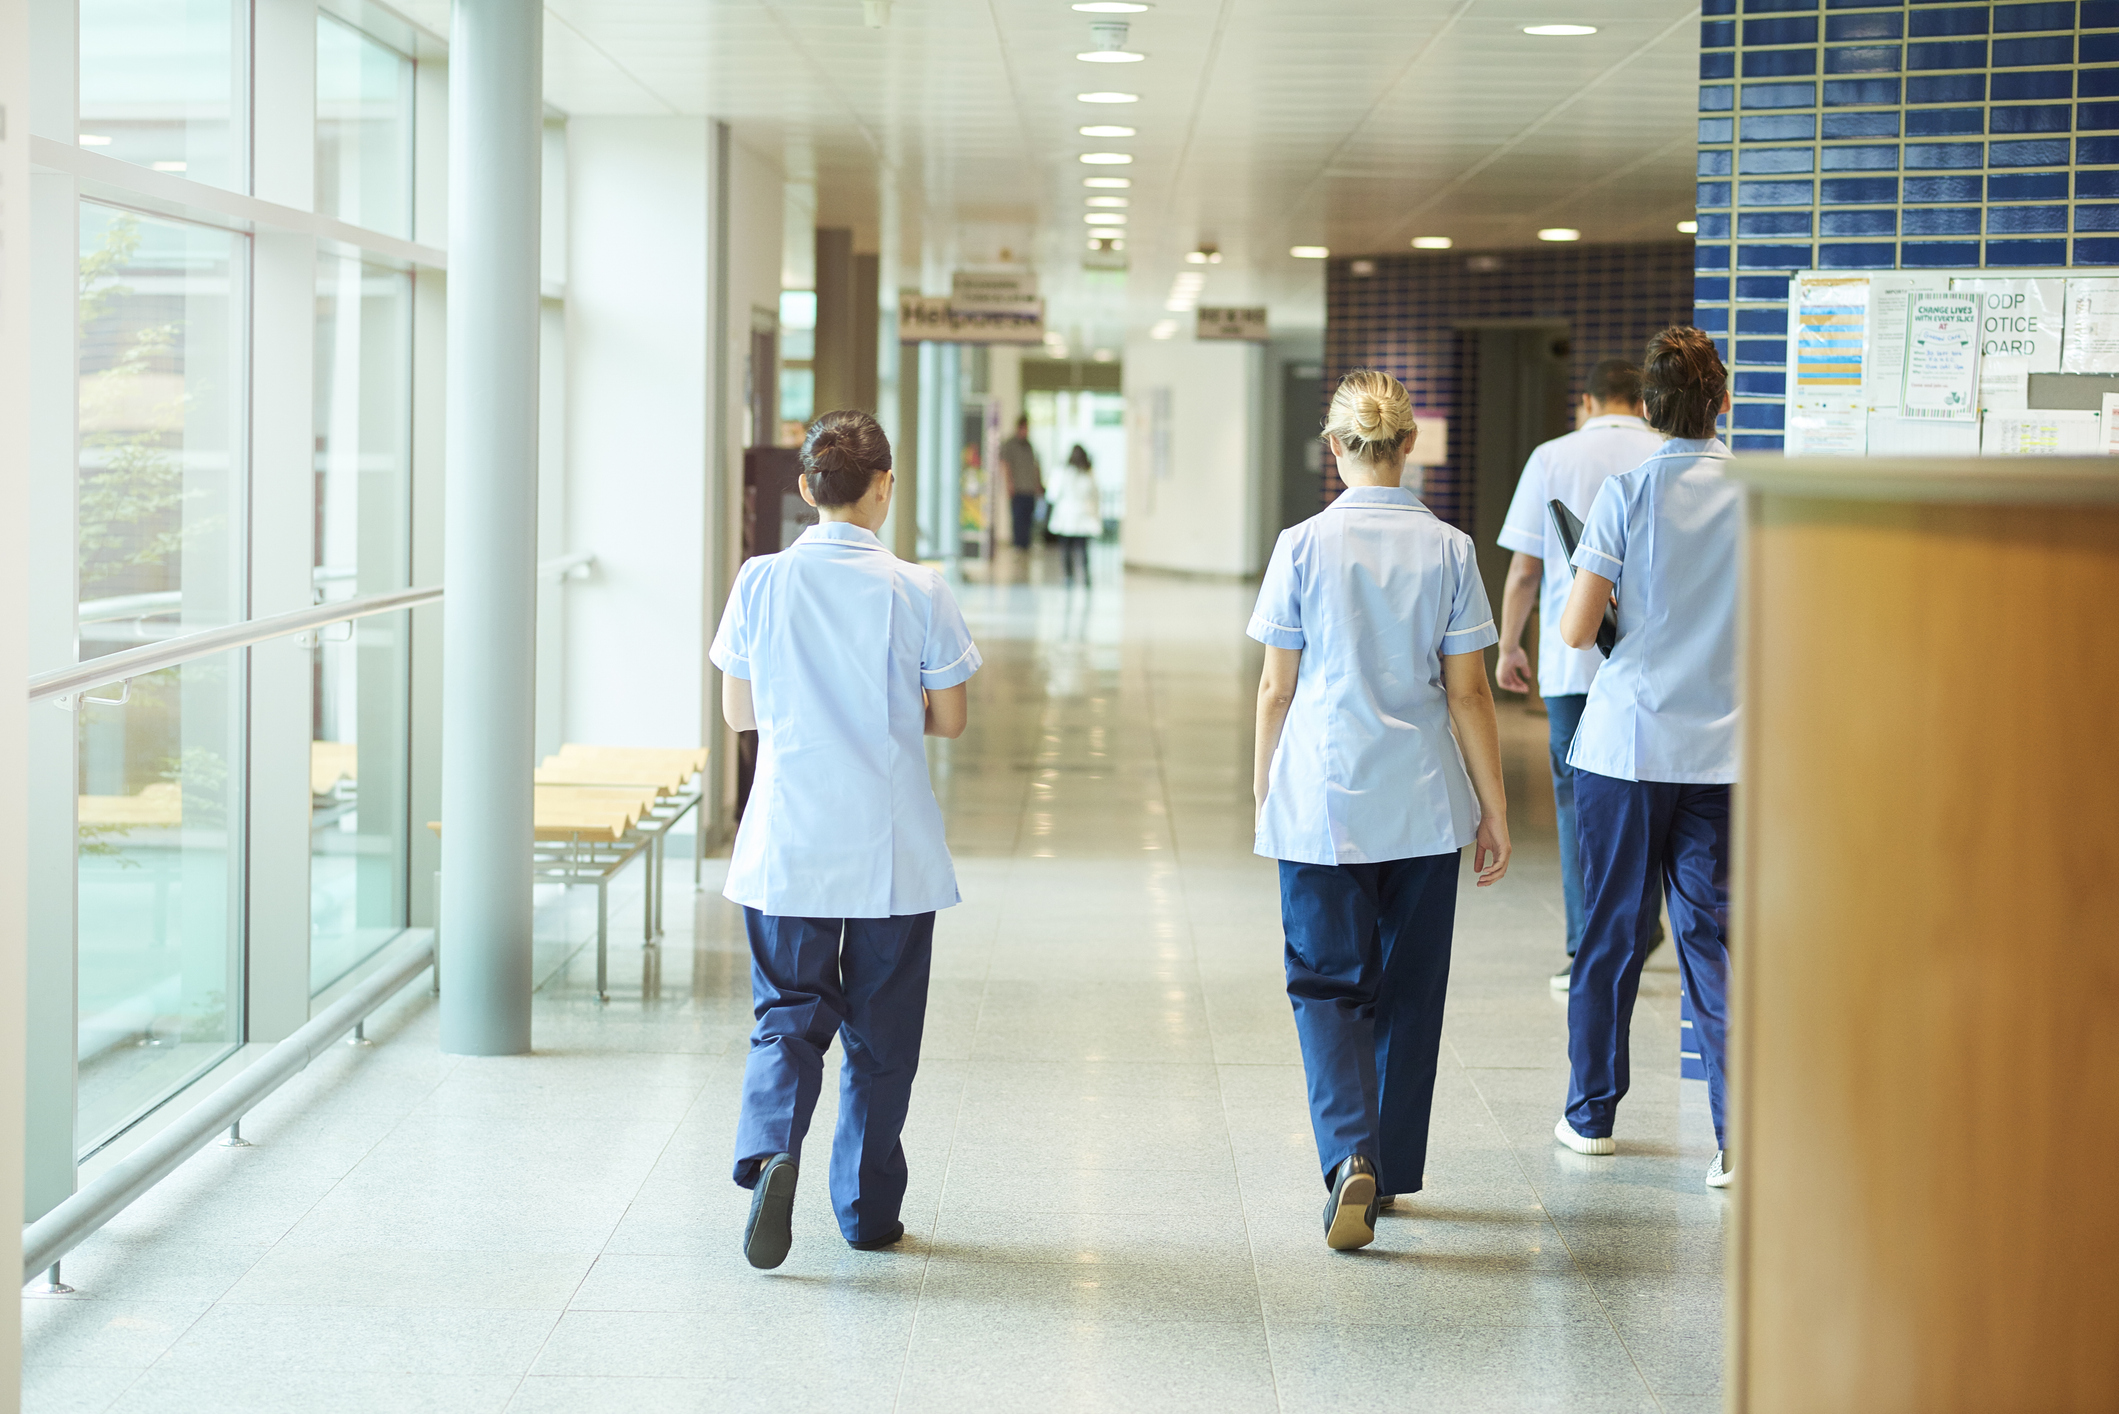 Four nurses walking along a corridor in a hospital